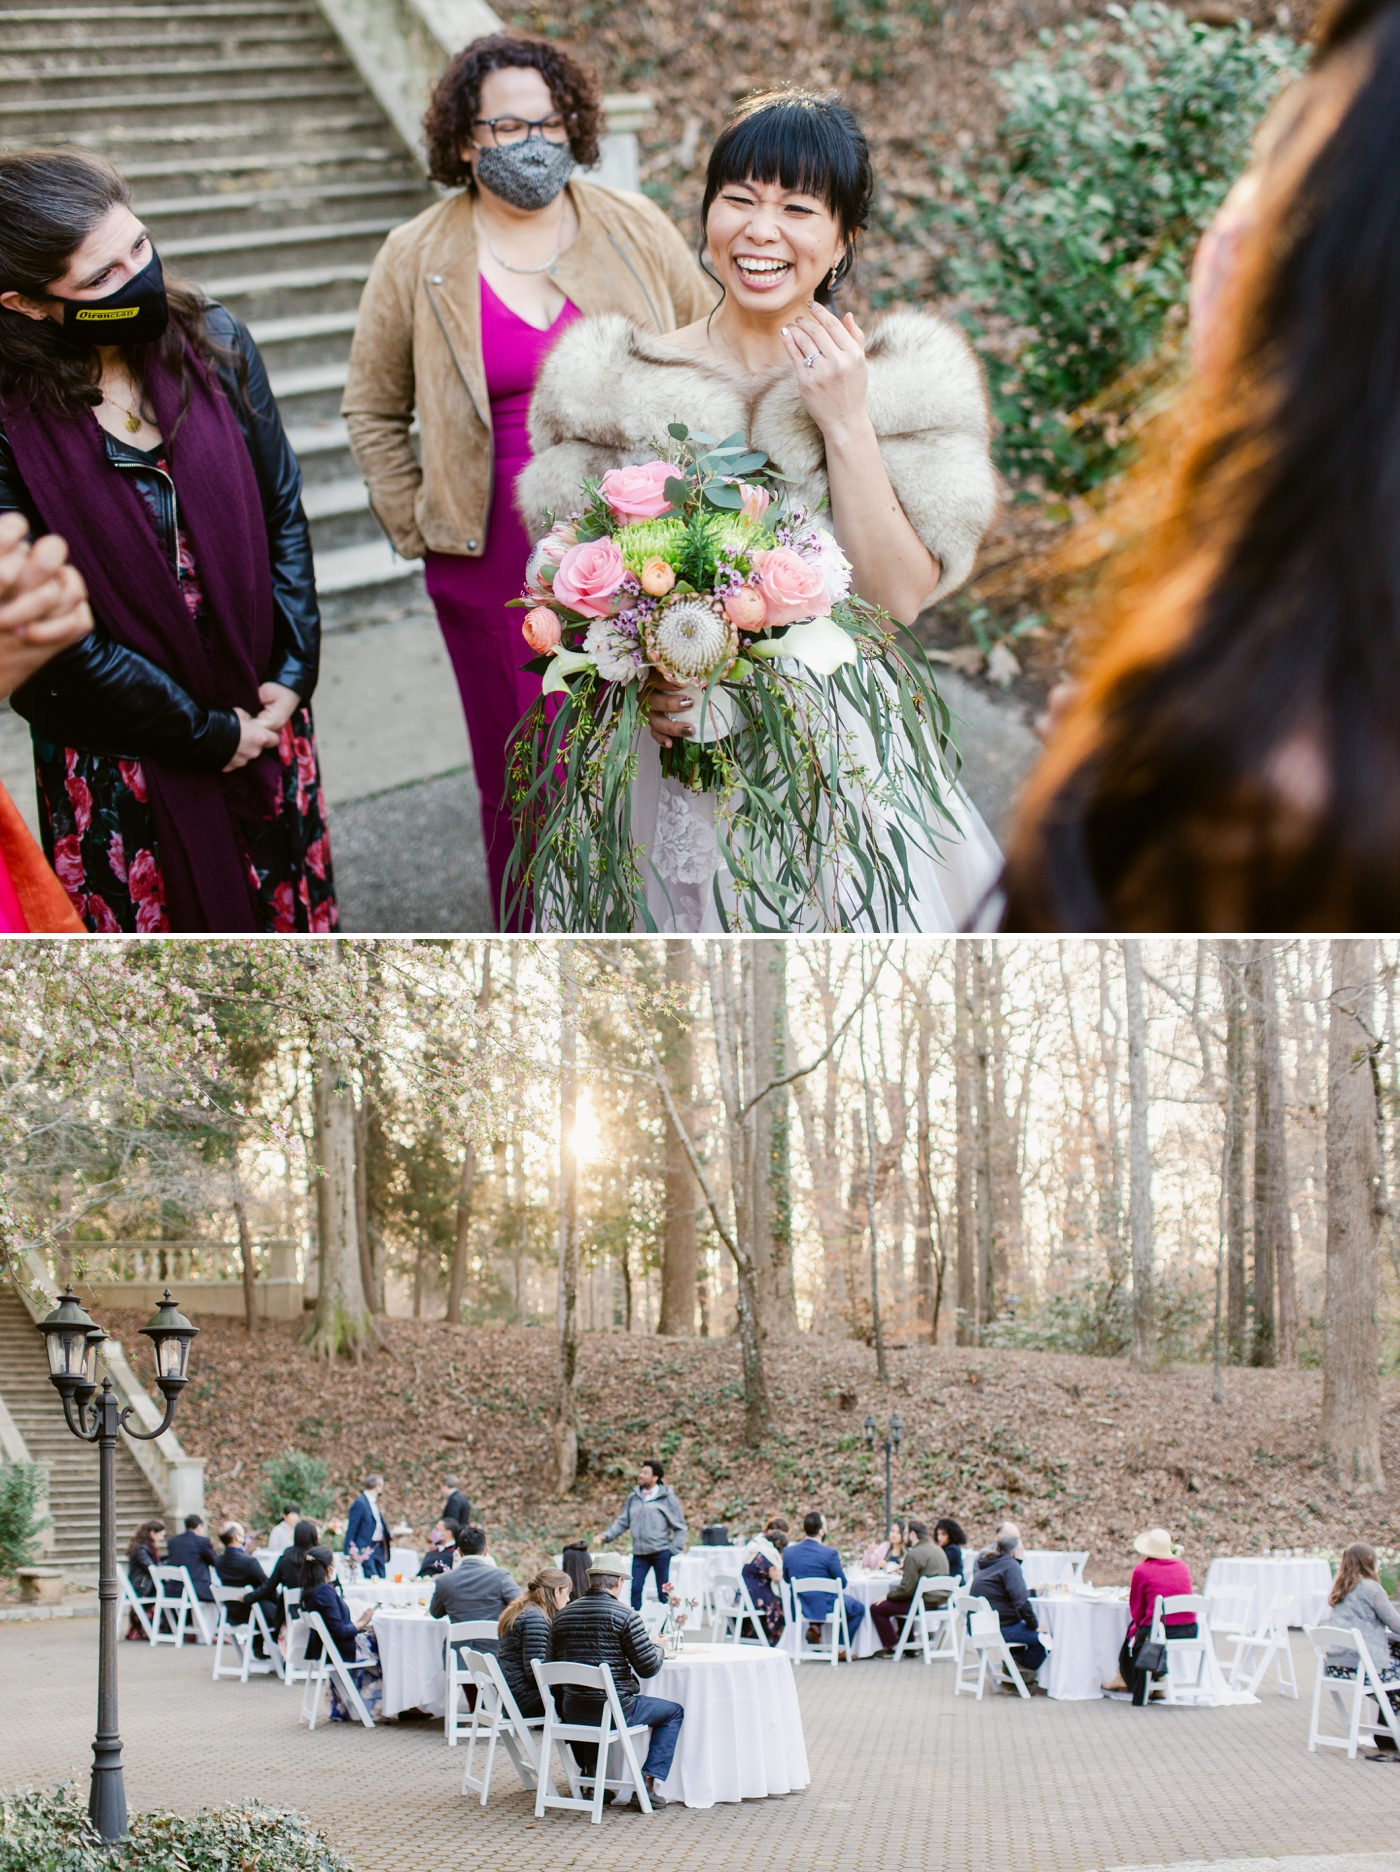 Outdoor wedding reception at Cator Woolford Gardens in Atlanta